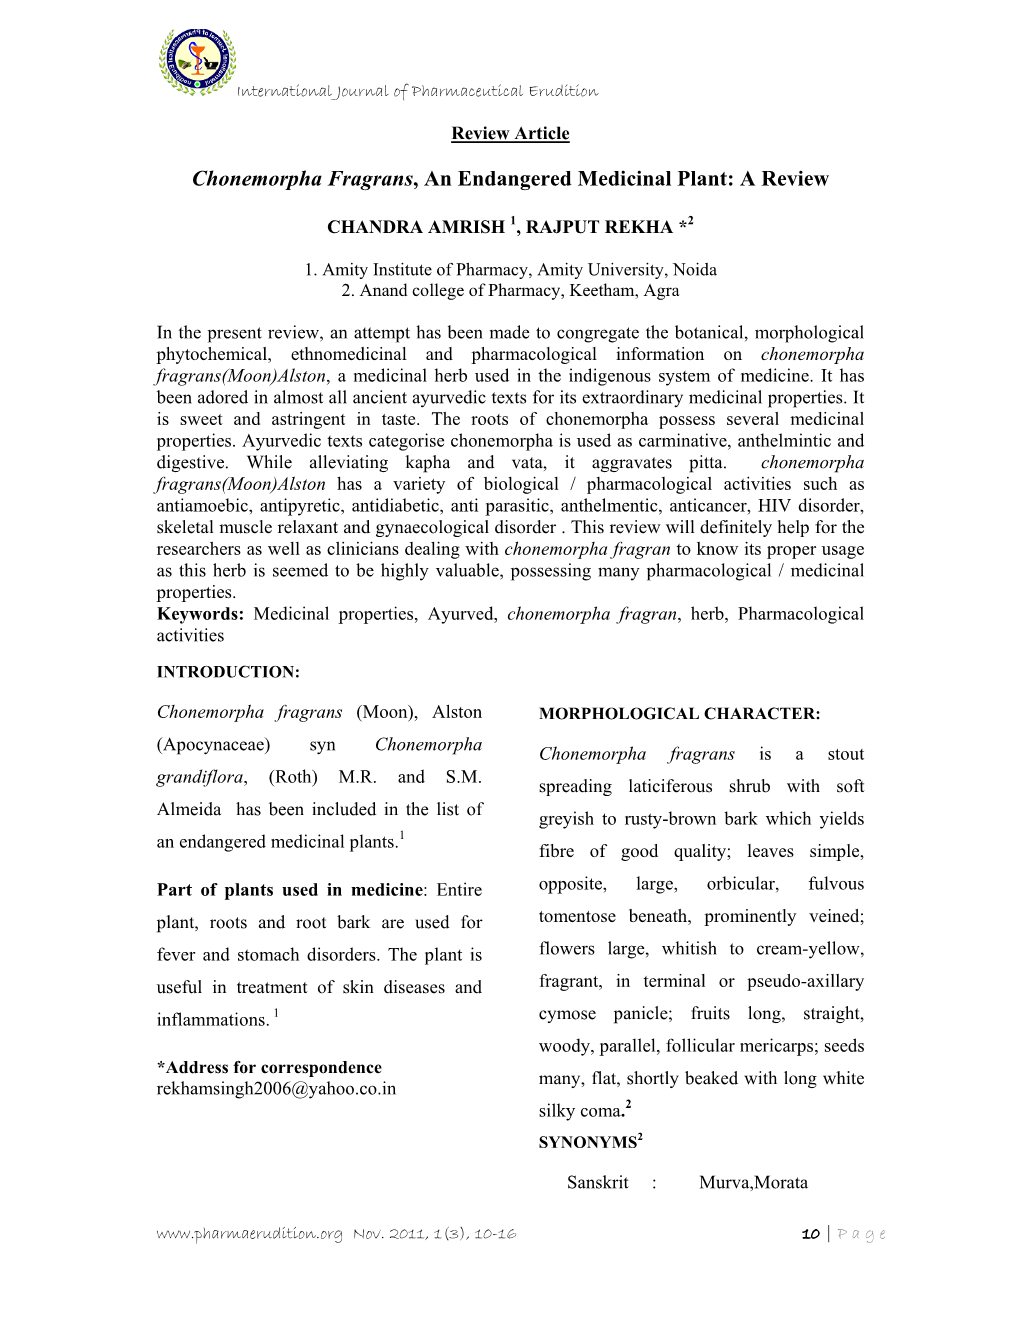 Chonemorpha Fragrans, an Endangered Medicinal Plant: a Review